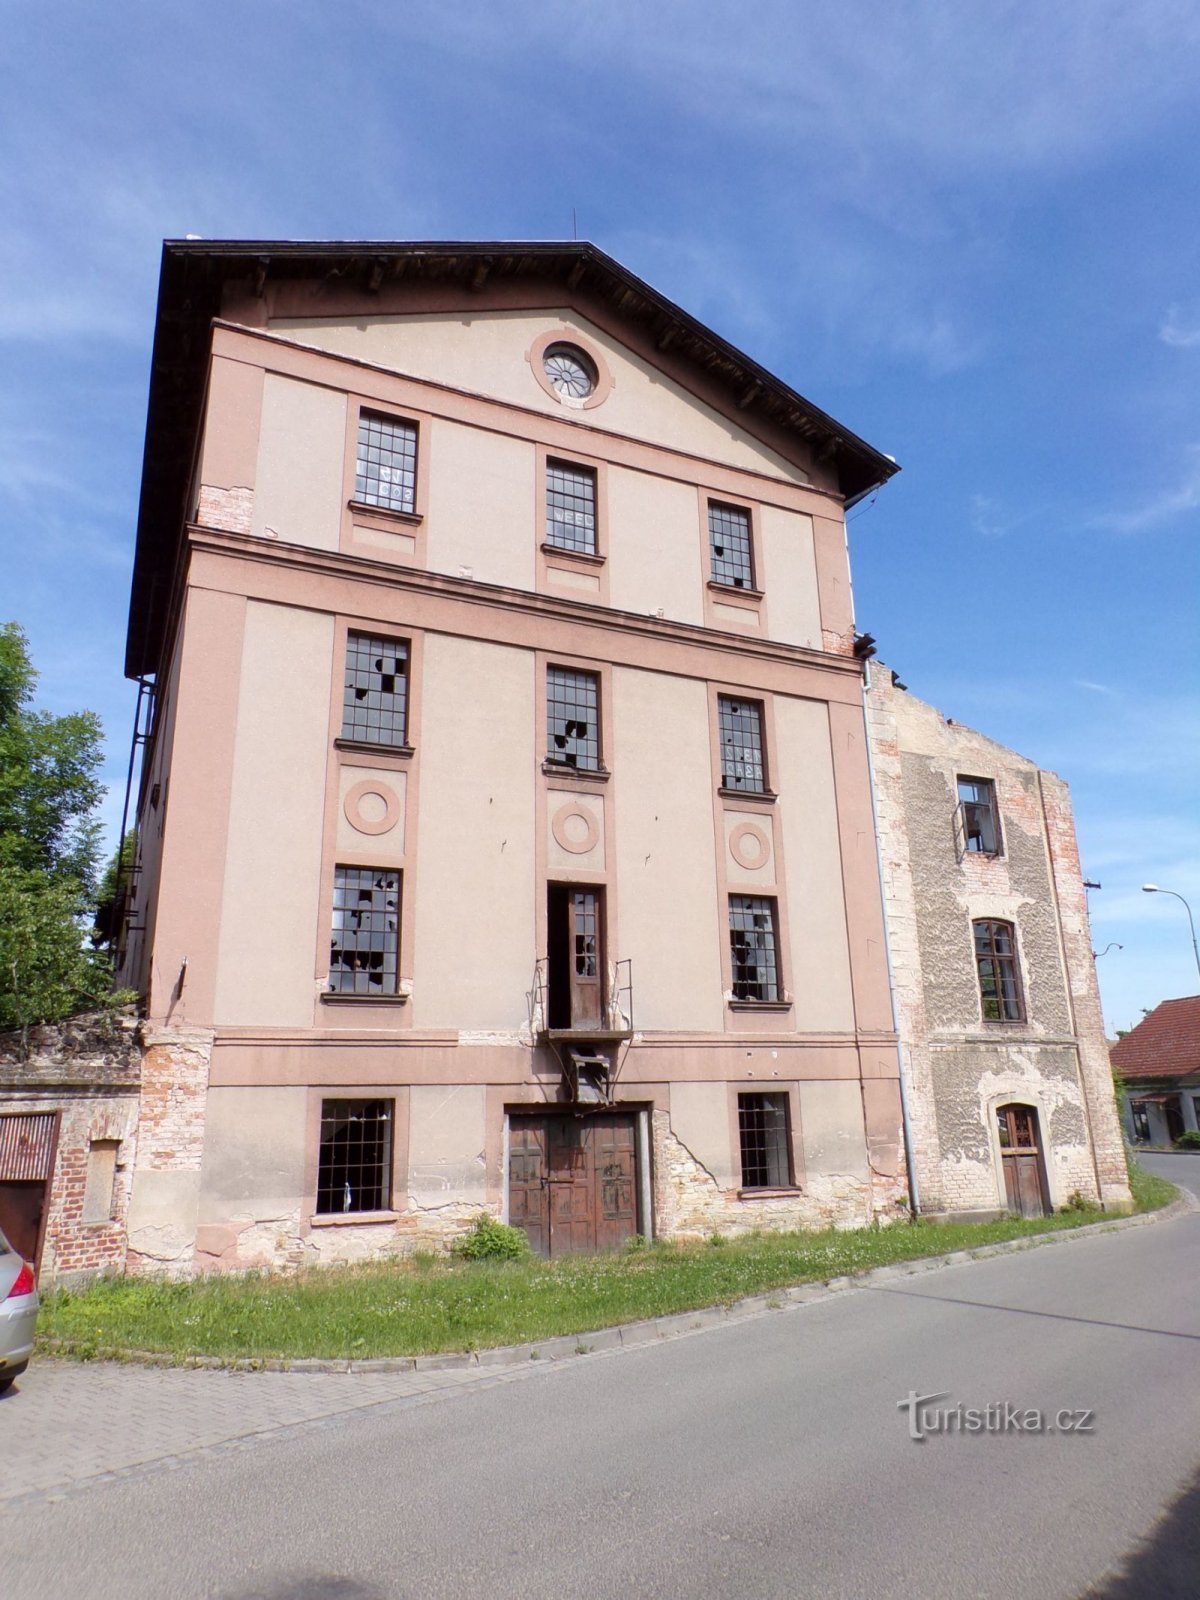 Hajnišův, formerly Dotřelův mill (Třebechovice pod Orebem, 15.6.2021/XNUMX/XNUMX)